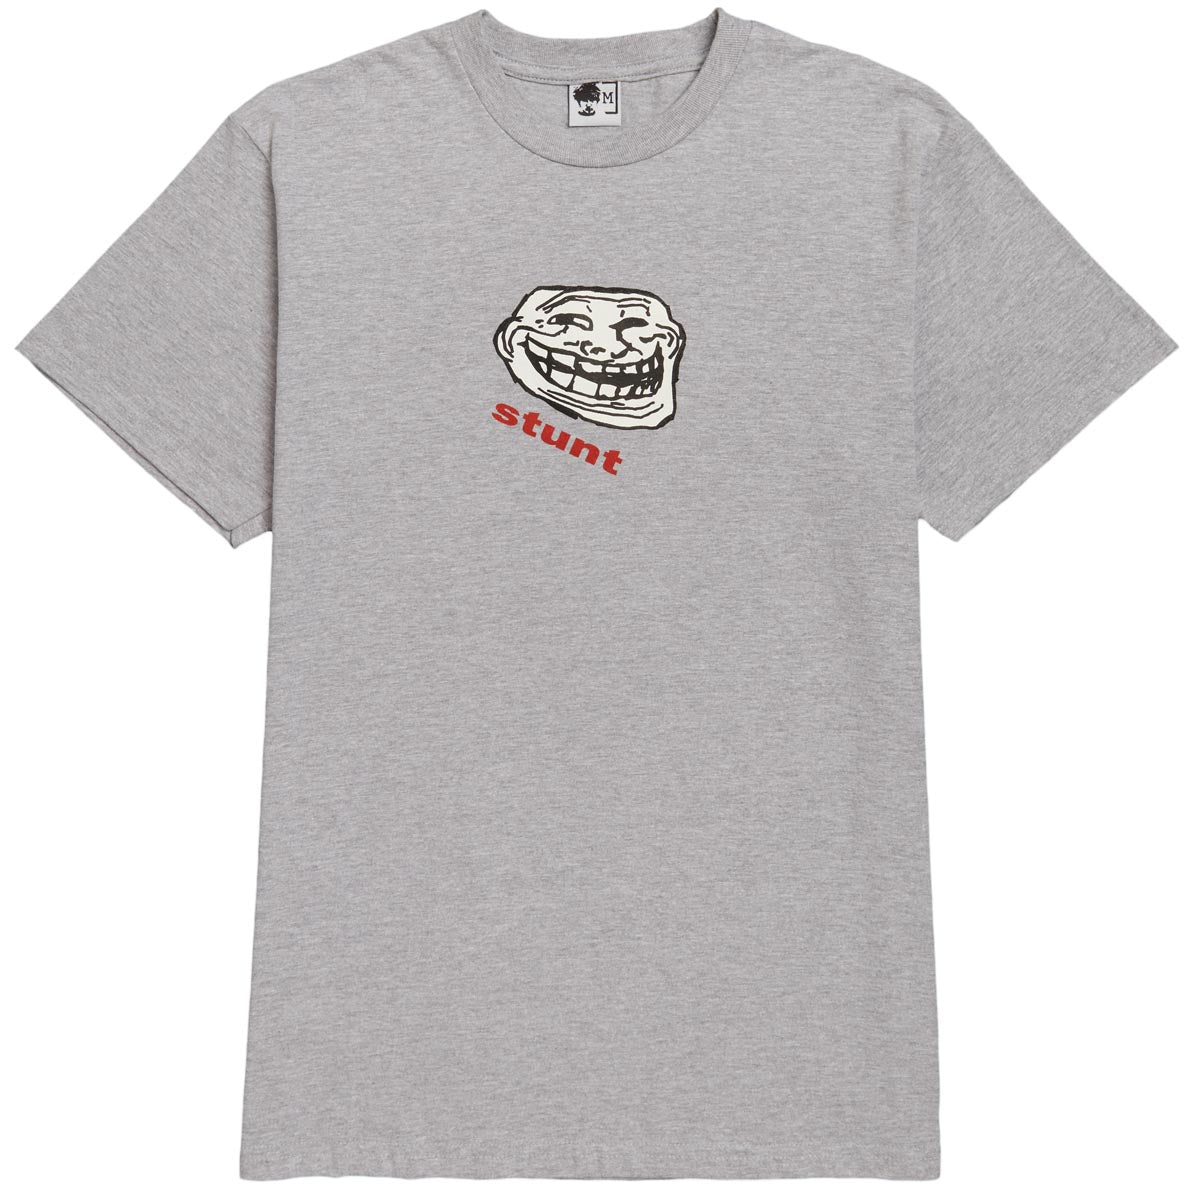 Stunt Troll T-Shirt - Grey image 1